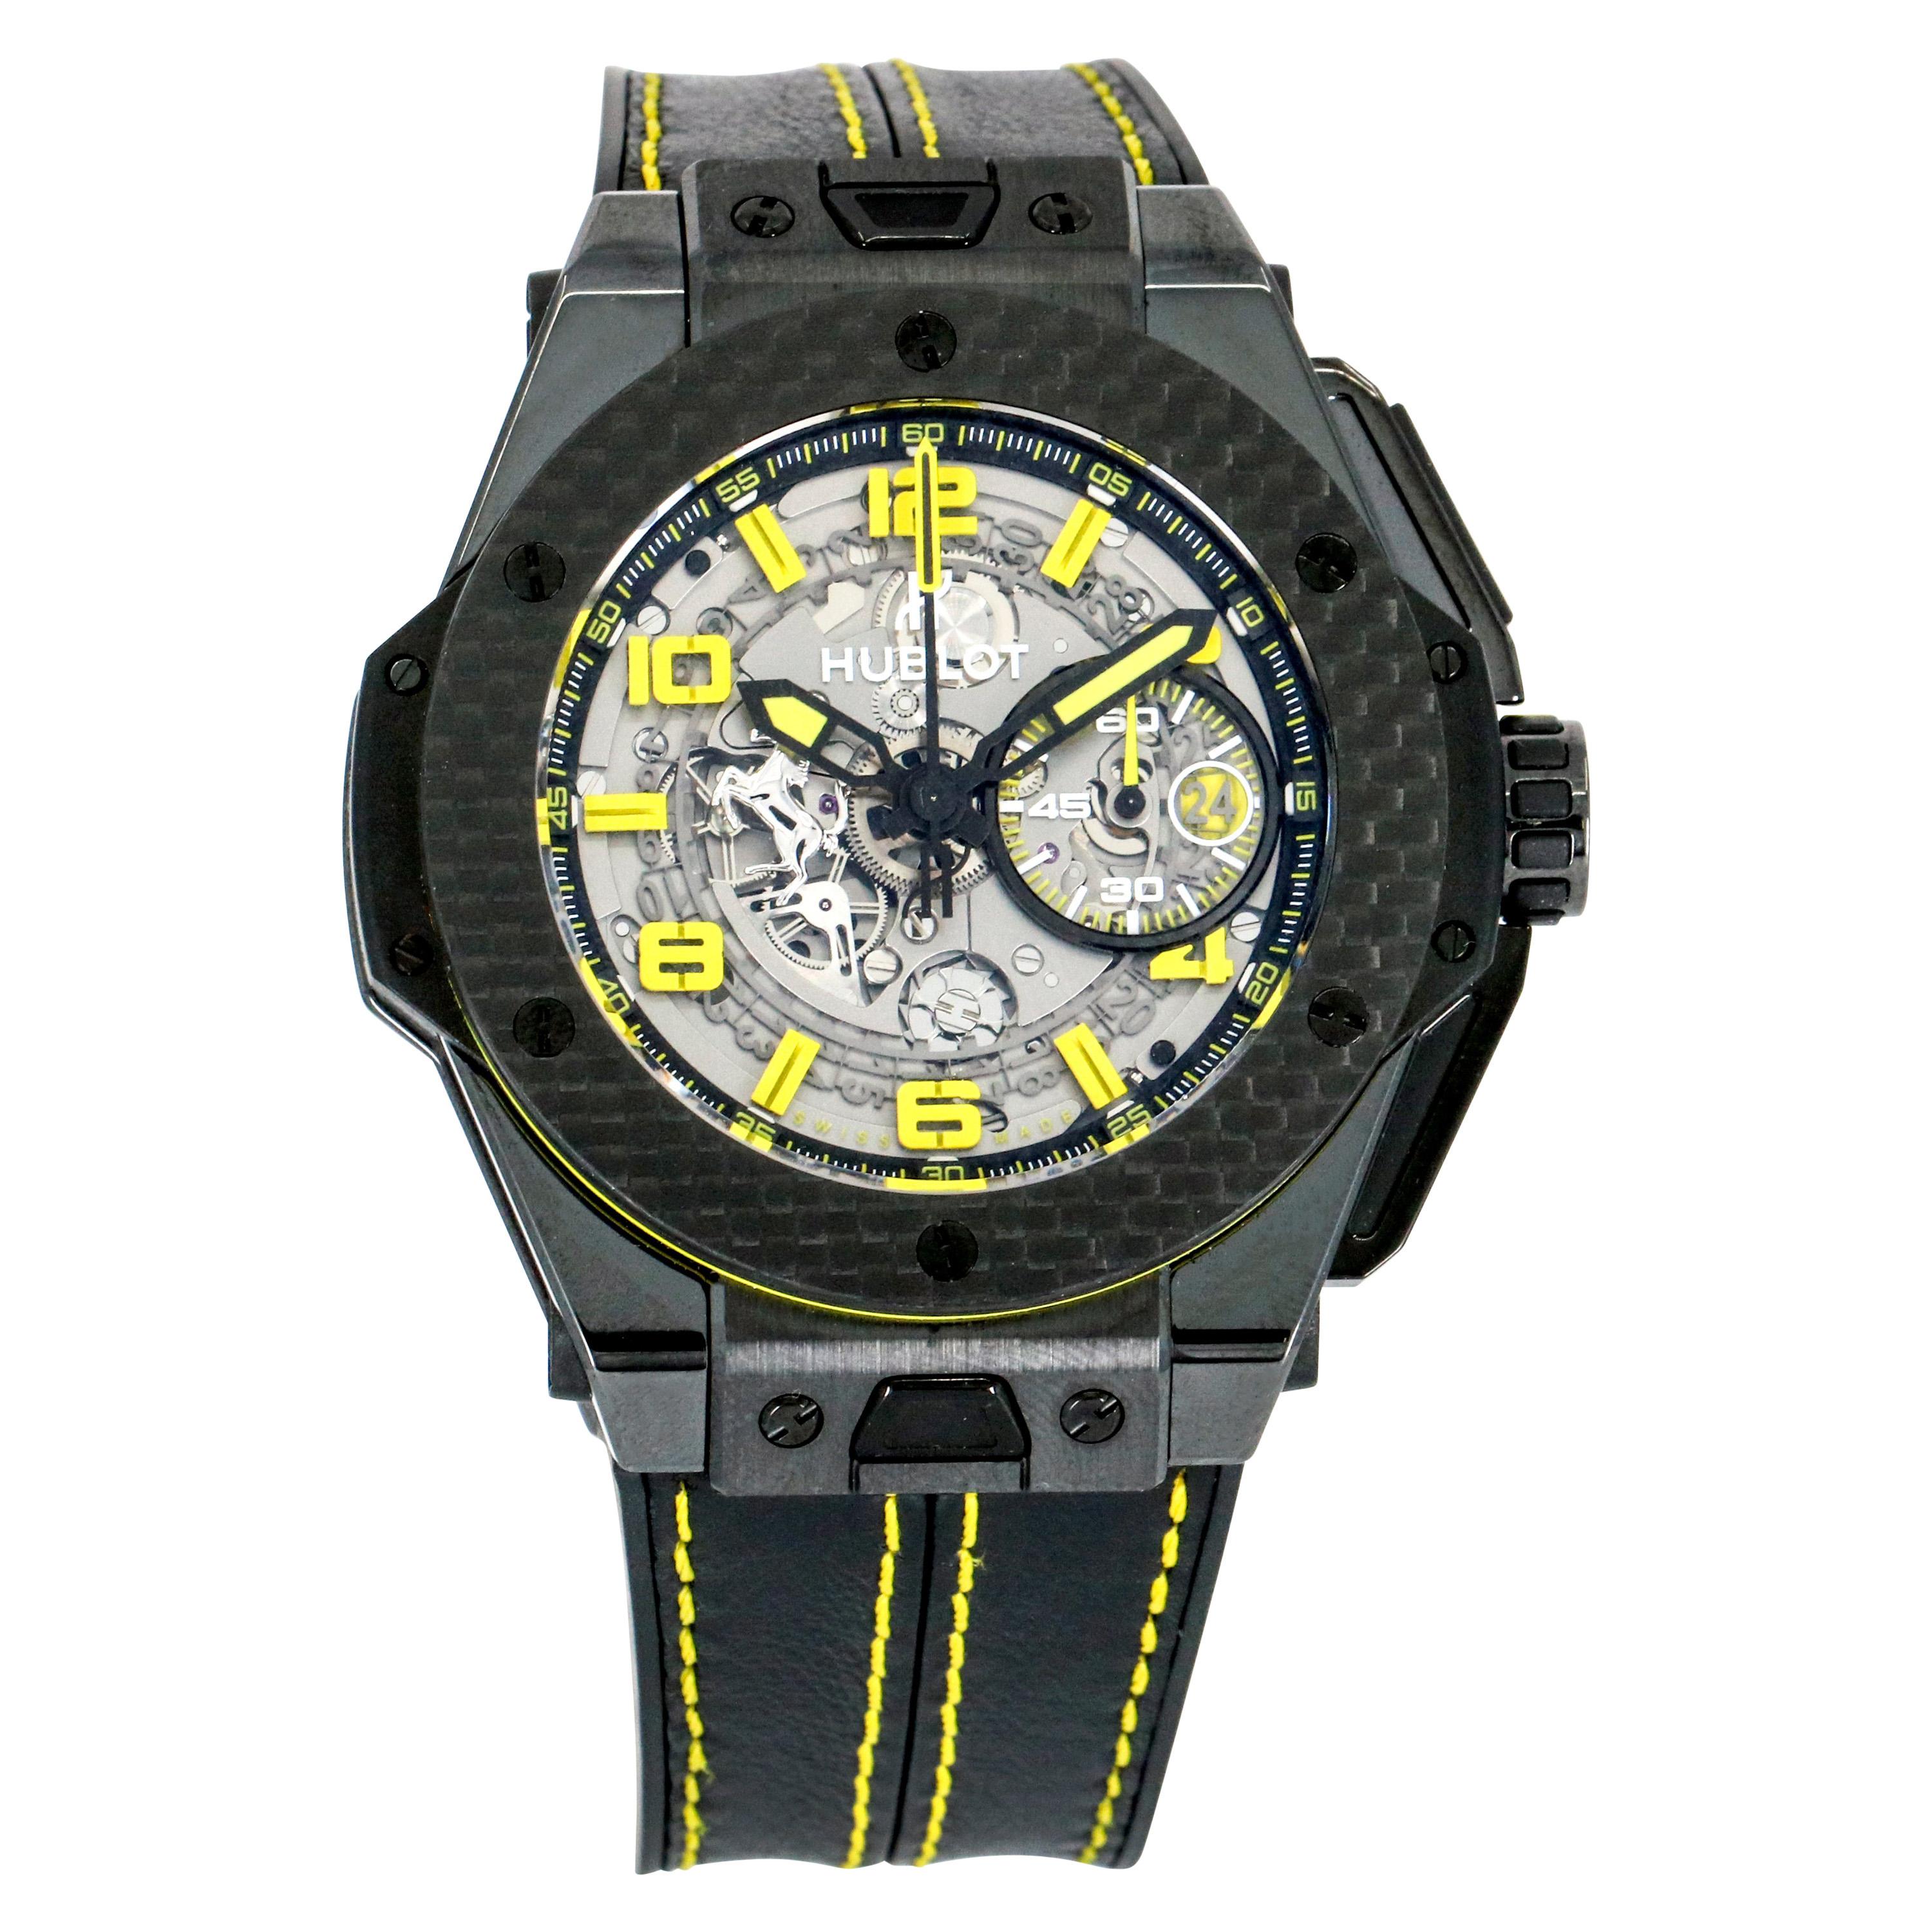 Hublot Big Bang Ferrari Limited Edition Carbon Fiber Ceramic Men's Watch For Sale